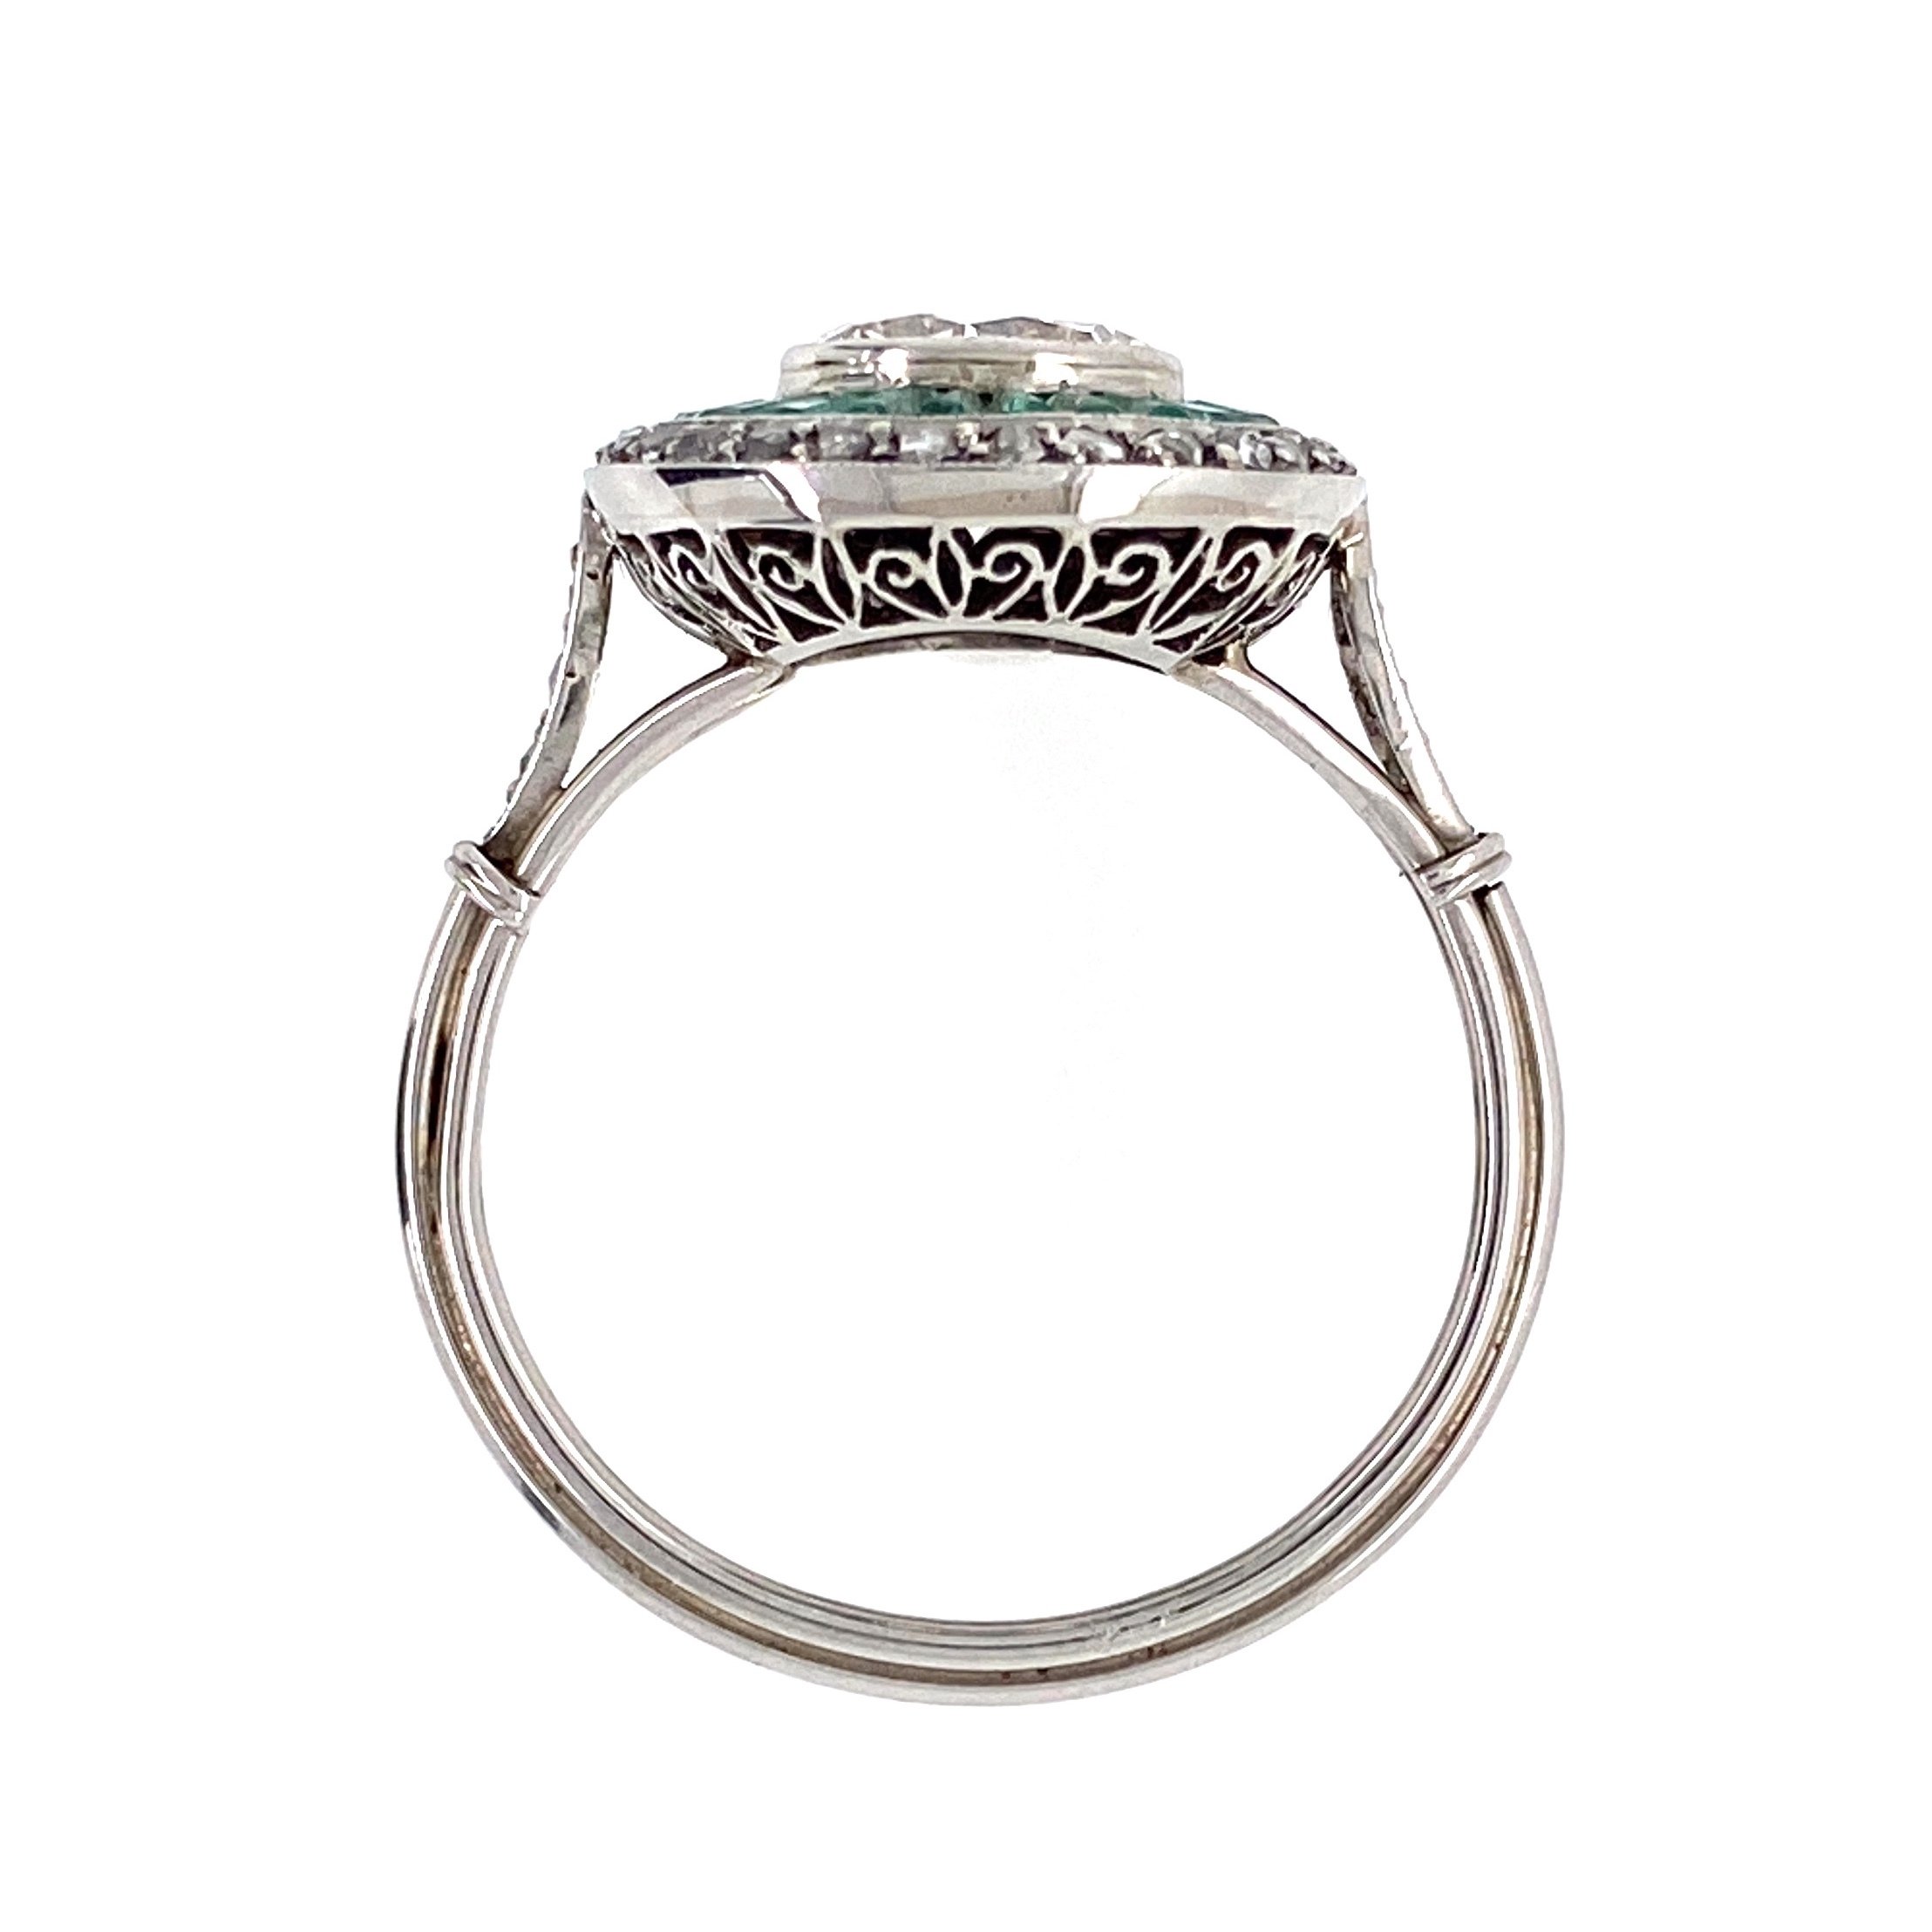 Platinum Art Deco 1.71tcw Diamond & Emerald Ring 4.8g, s7.75